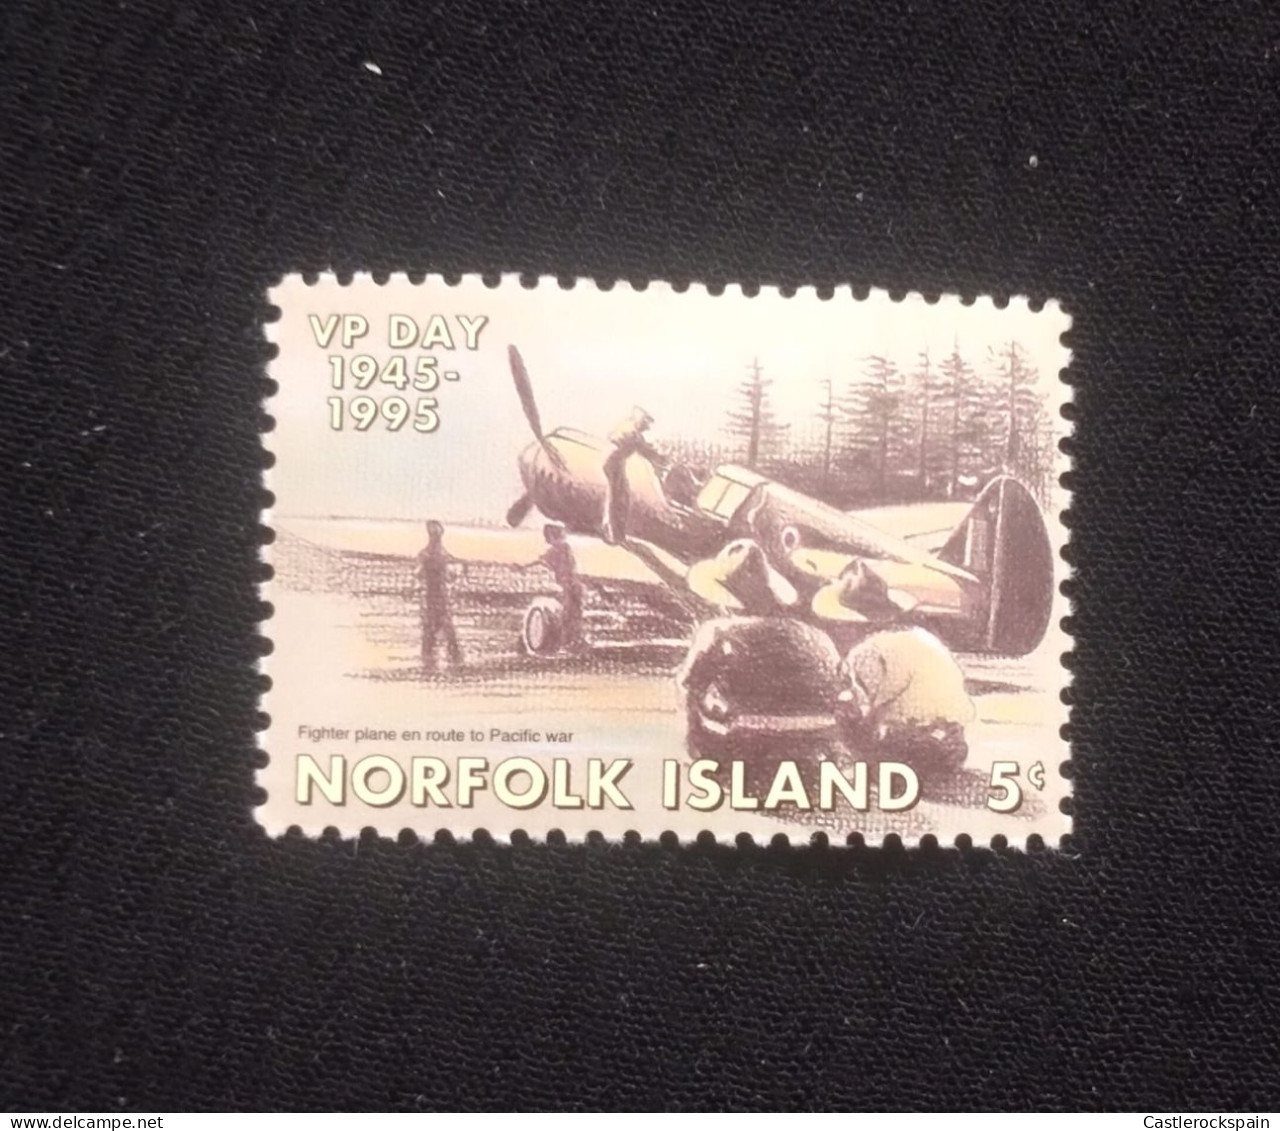 O) 1995 NORFOLK ISLAND, VP DAY,  FIGHTER PLANE EN ROUTE TO PACIFIC WAR, MNH - Norfolk Island